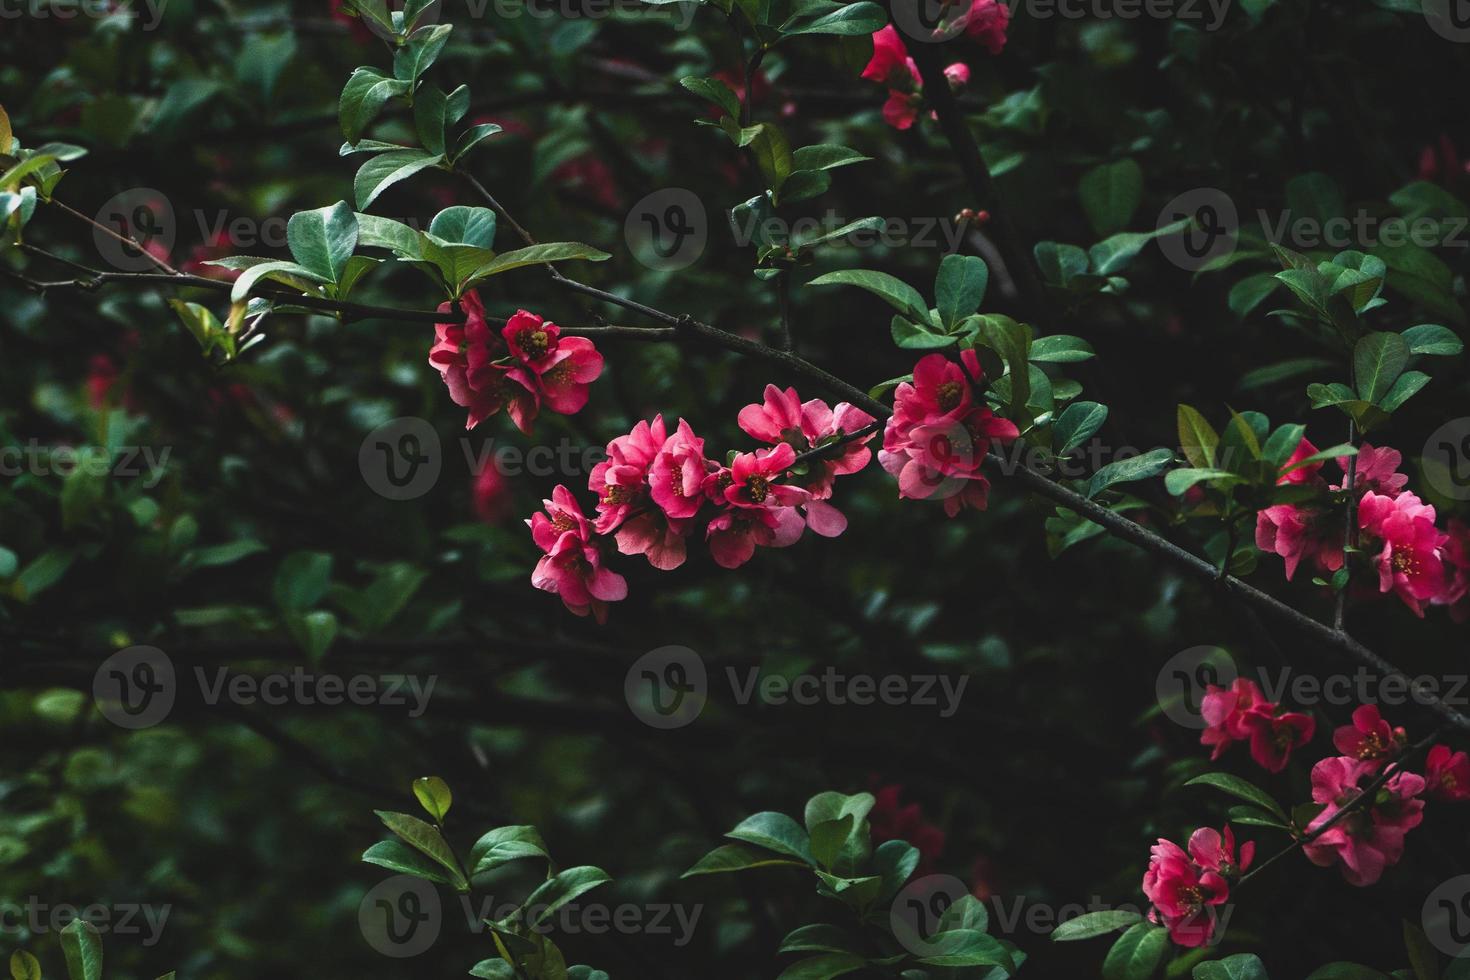 chaenomeles speciosa - Chinese kweepeer struik bloeiend in de tuin, donker laag sleutel natuur achtergrond foto